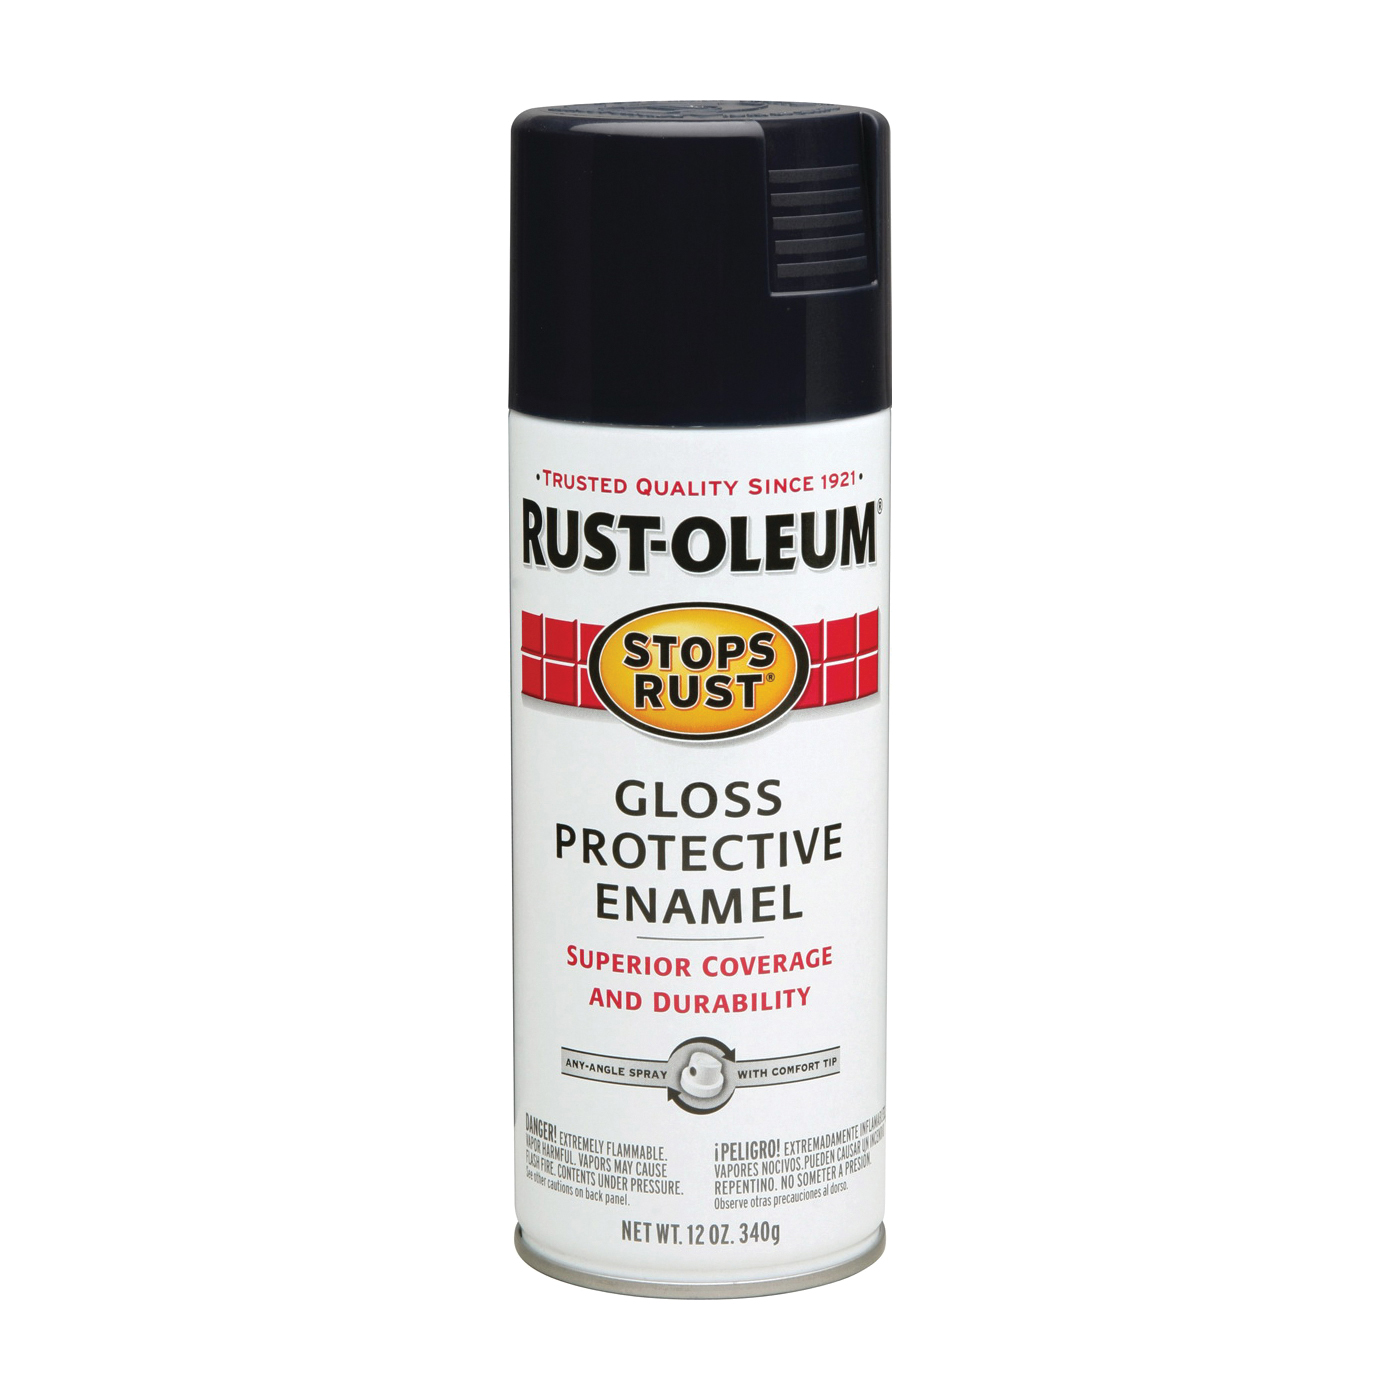 STOPS RUST 7779830 Protective Enamel Spray Paint, Gloss, Black, 12 oz, Aerosol Can